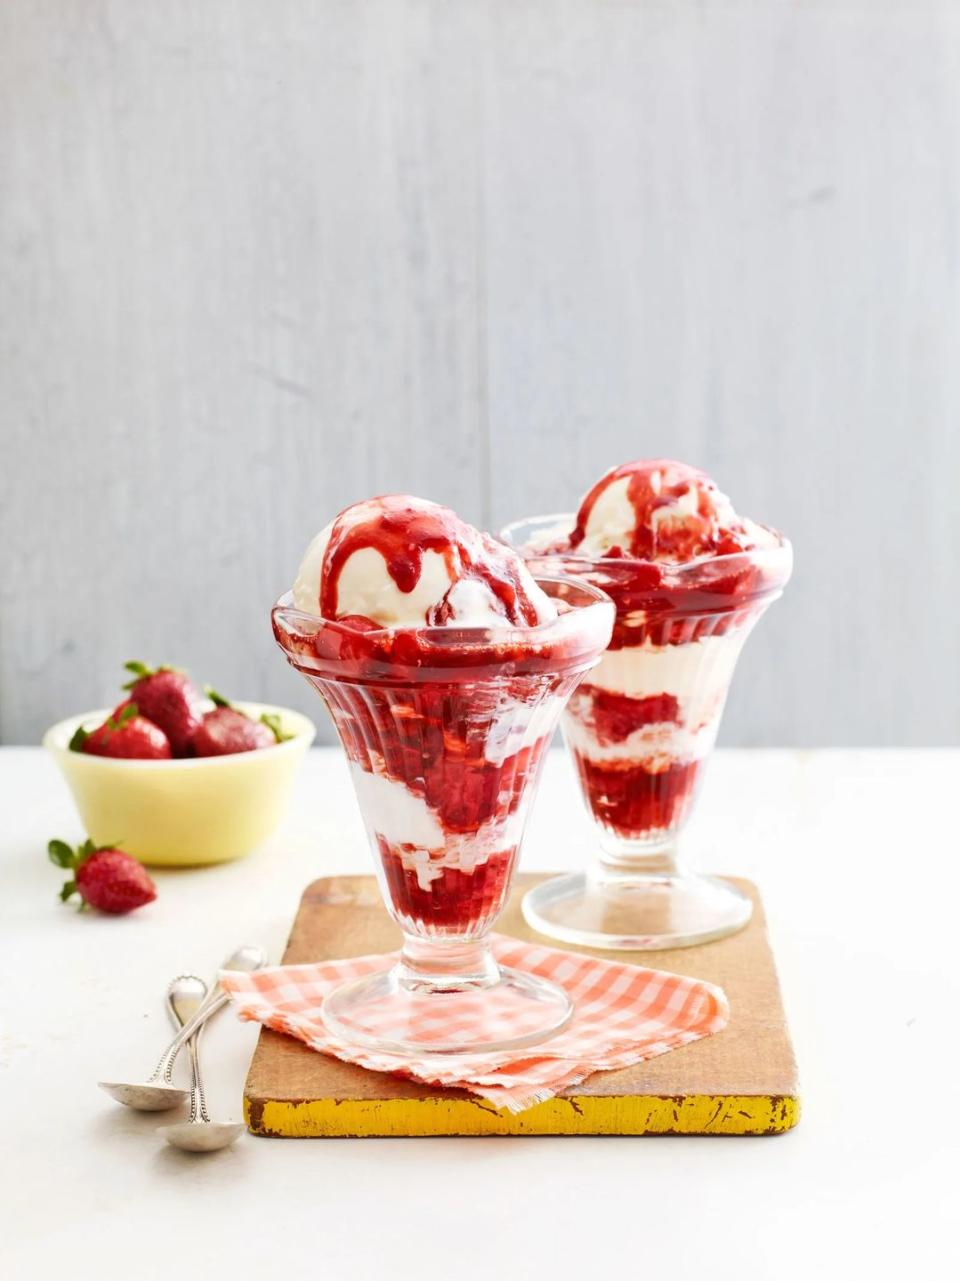 brown sugar balsamic strawberry sauce over vanilla ice cream in sundae glasses